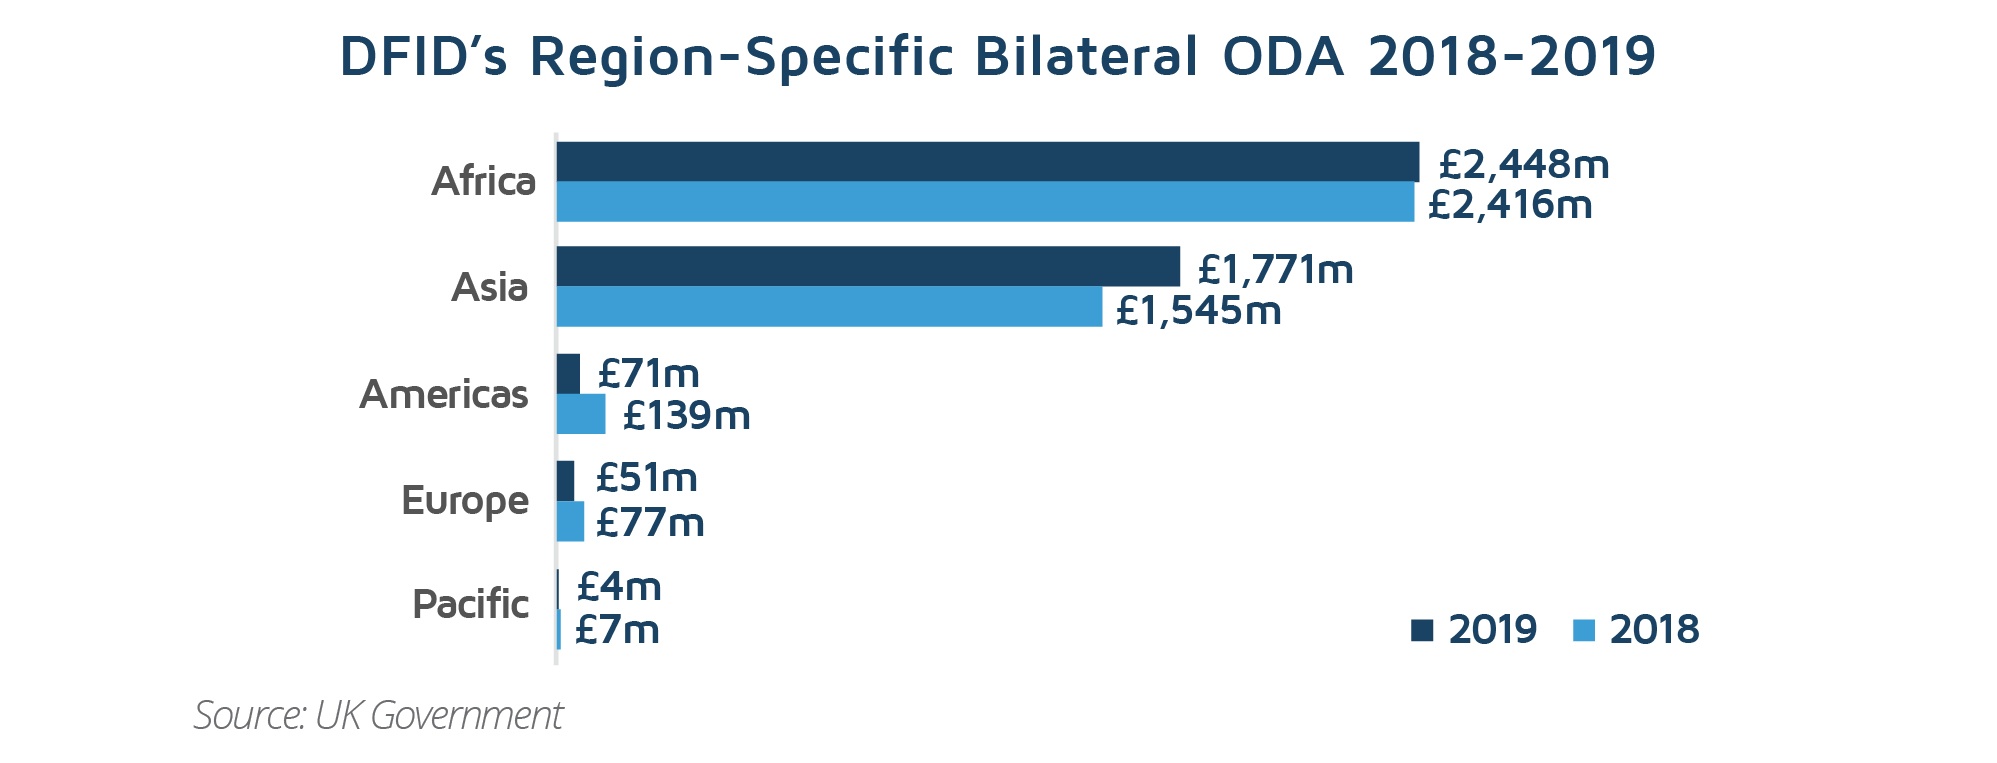 DFID's region-specific bilateral ODA 2018-2019